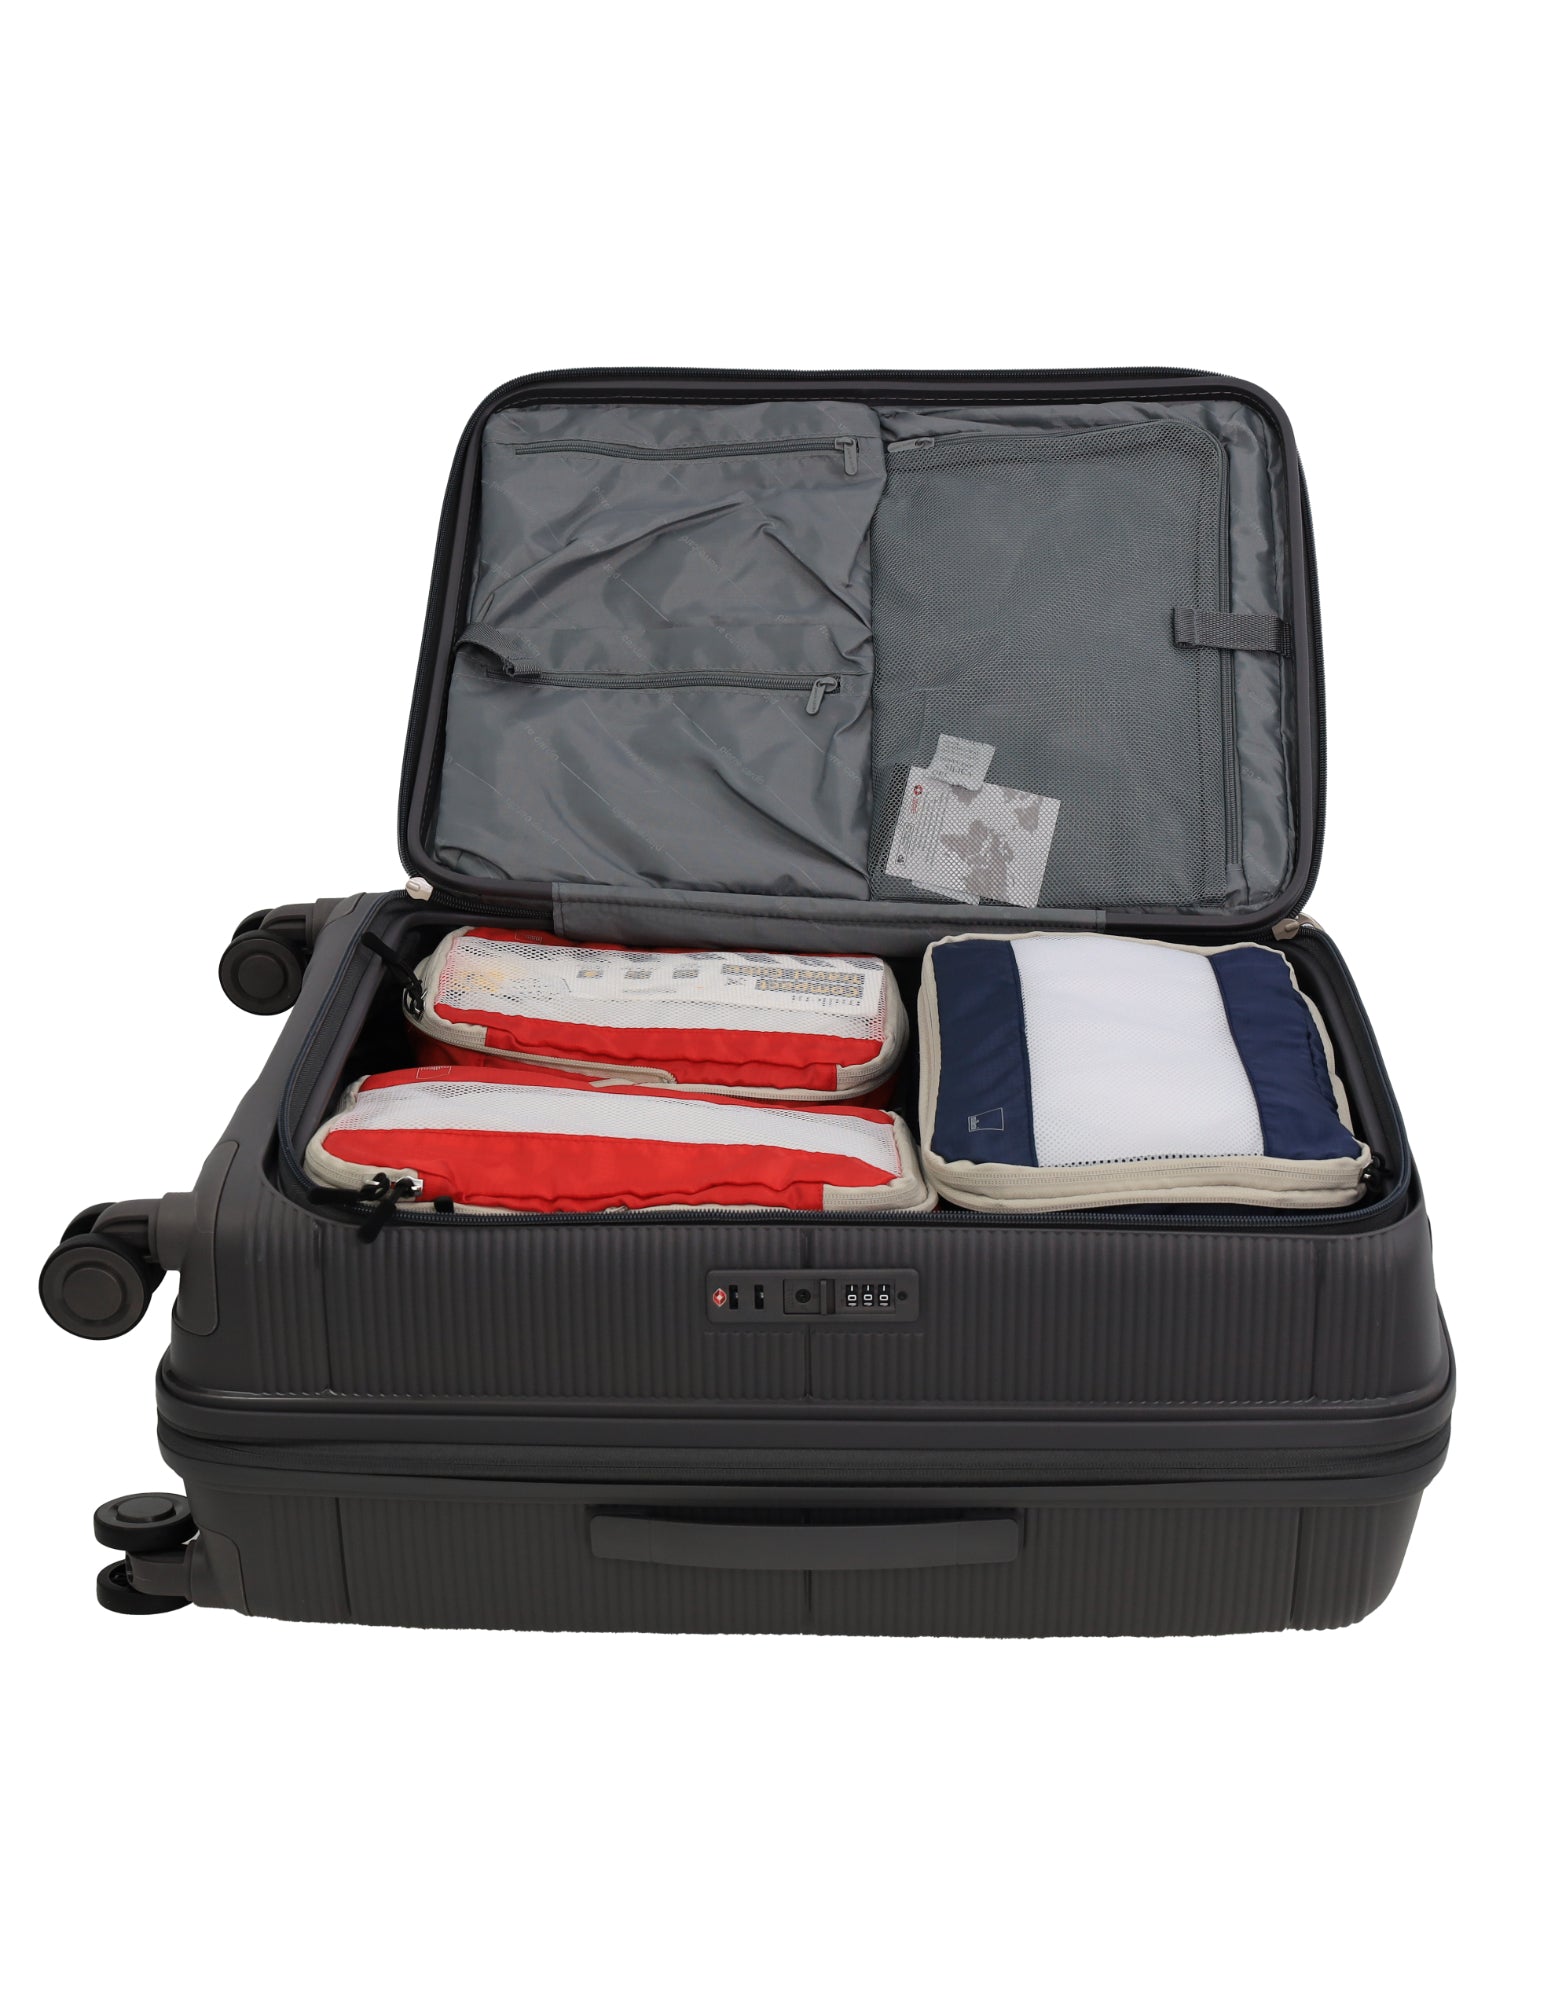 Pierre Cardin 69cm MEDIUM Hard Shell Suitcase in Graphite